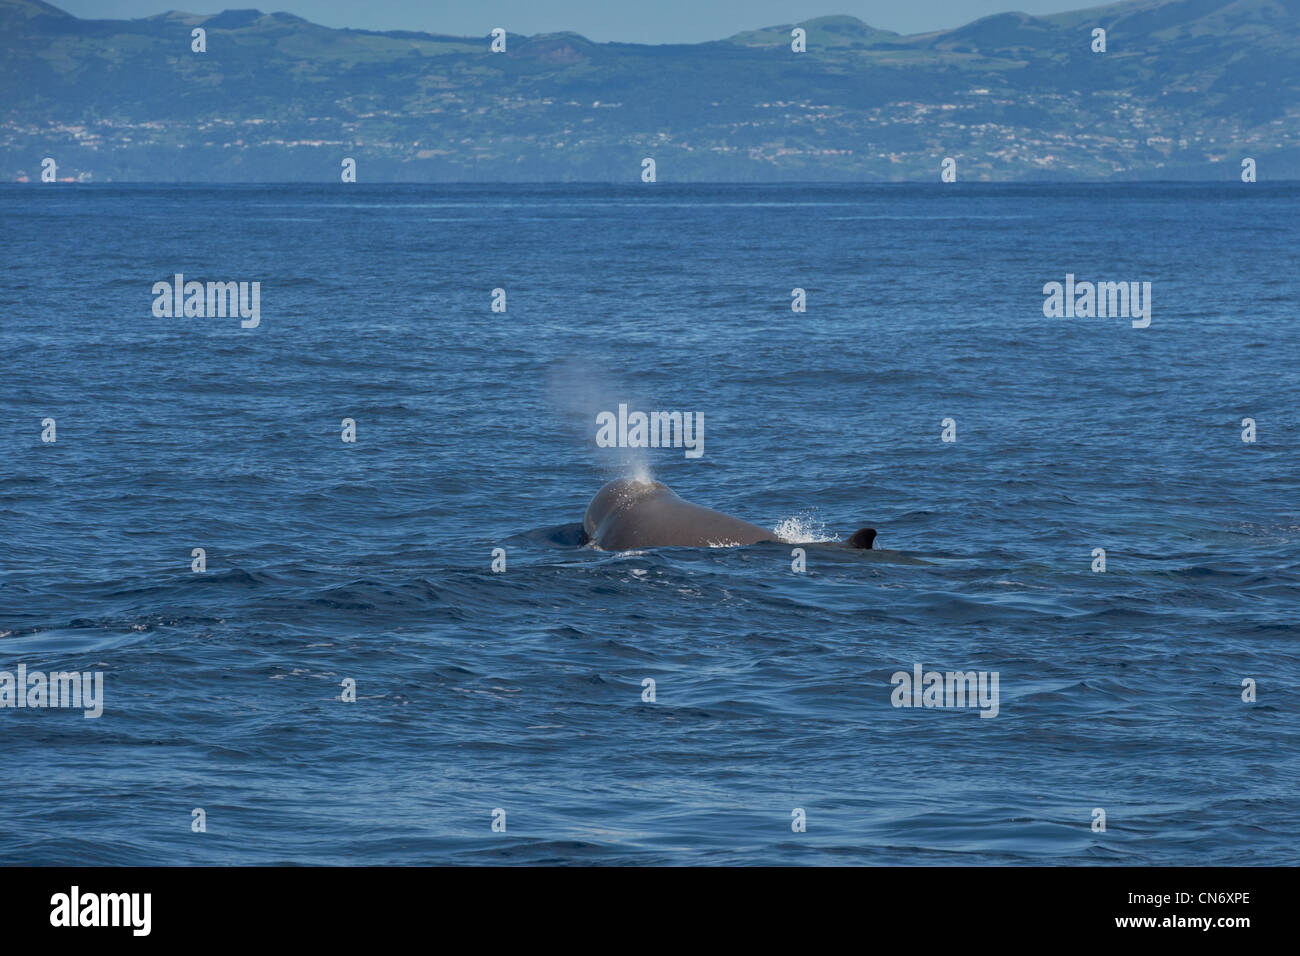 Northern Bottlenose Whale (Hyperoodon ampullatus) adult animal surfacing, rare unusual image. Azores, Atlantic Ocean. Stock Photo